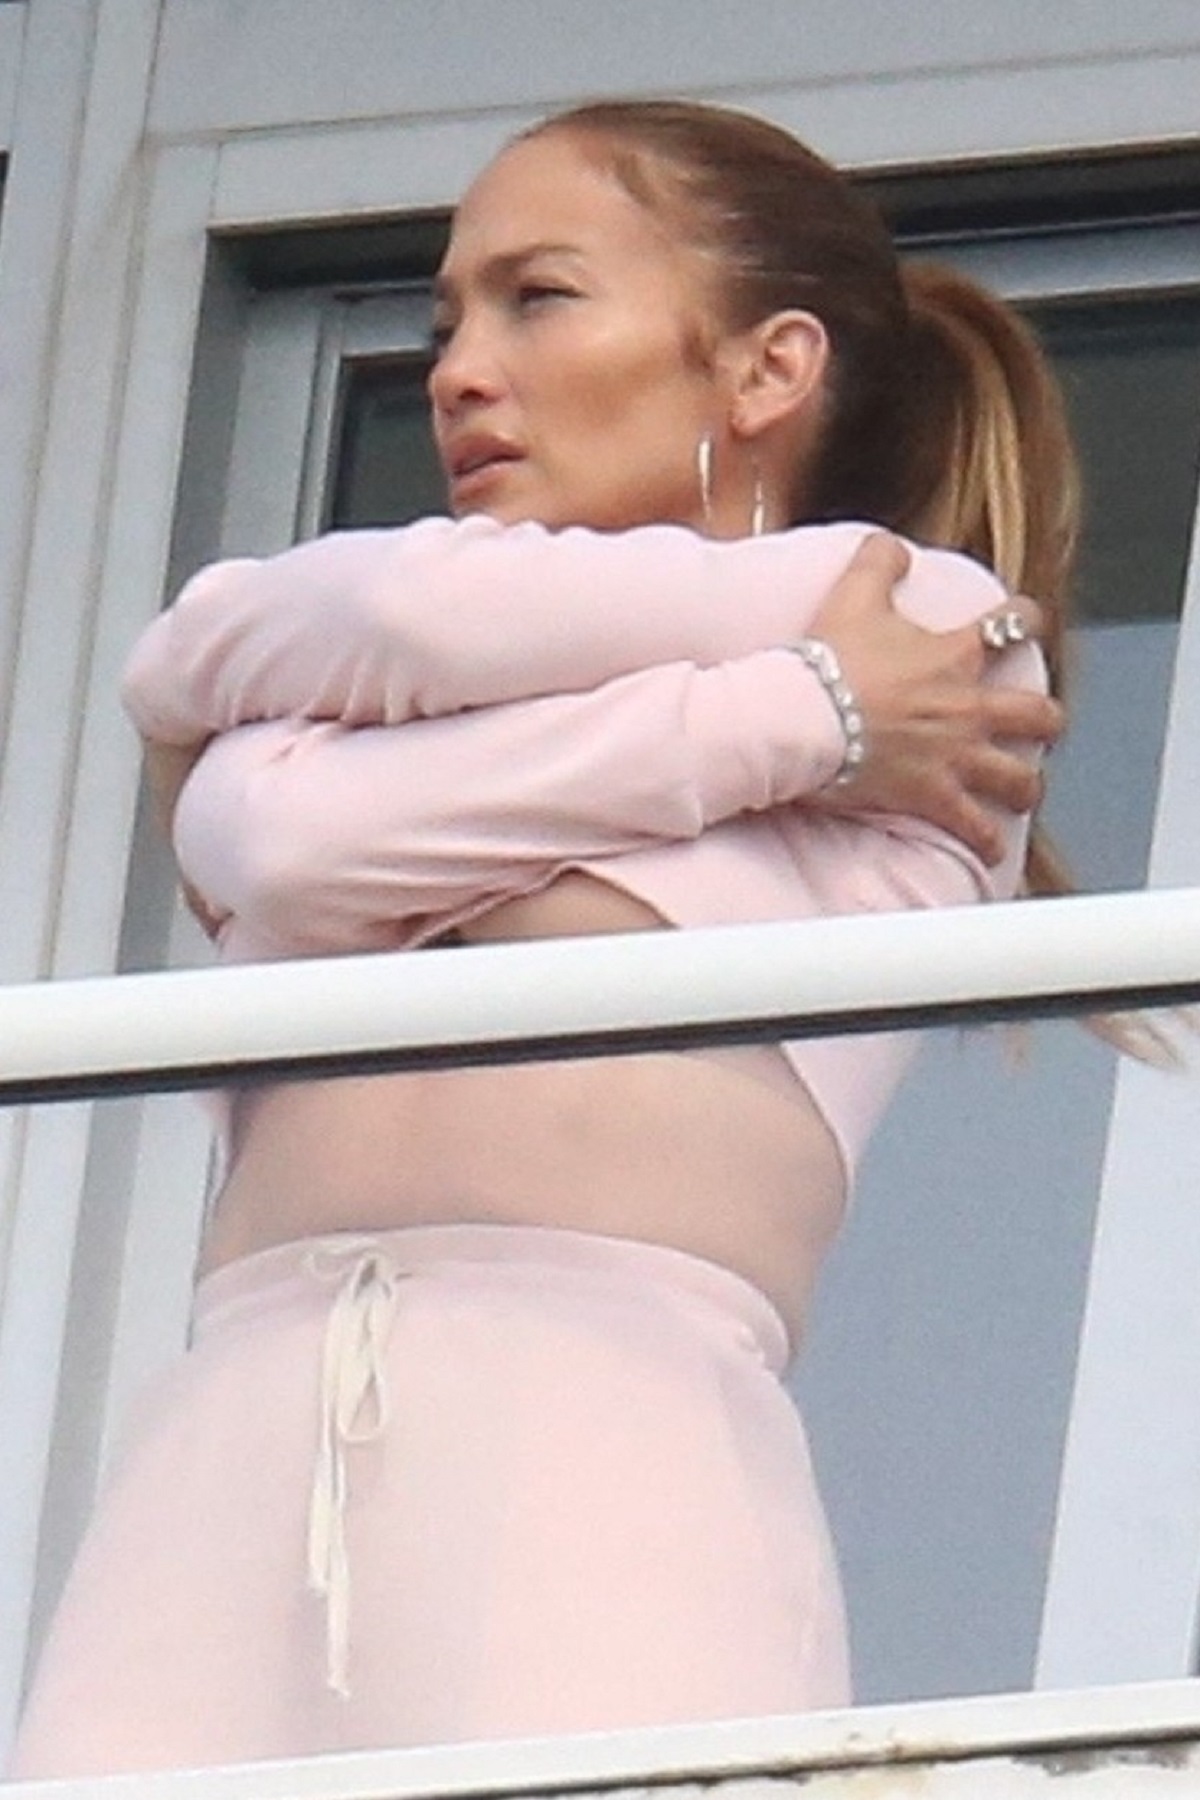 Jennifer Lopez și-a lăsat la vedere bustul generos